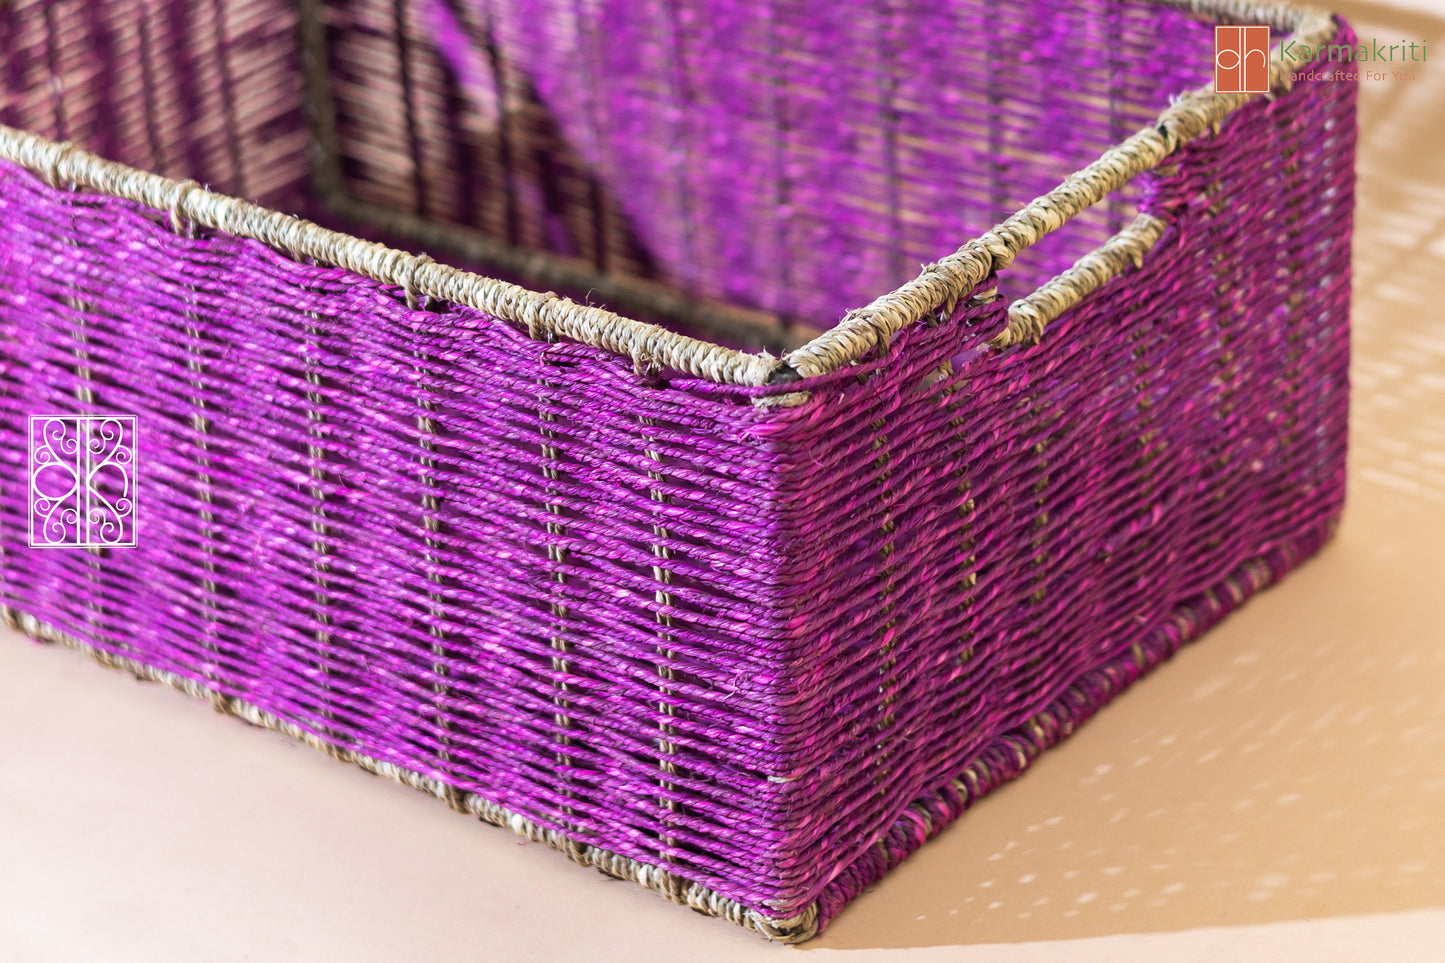 Handwoven Purple Basket